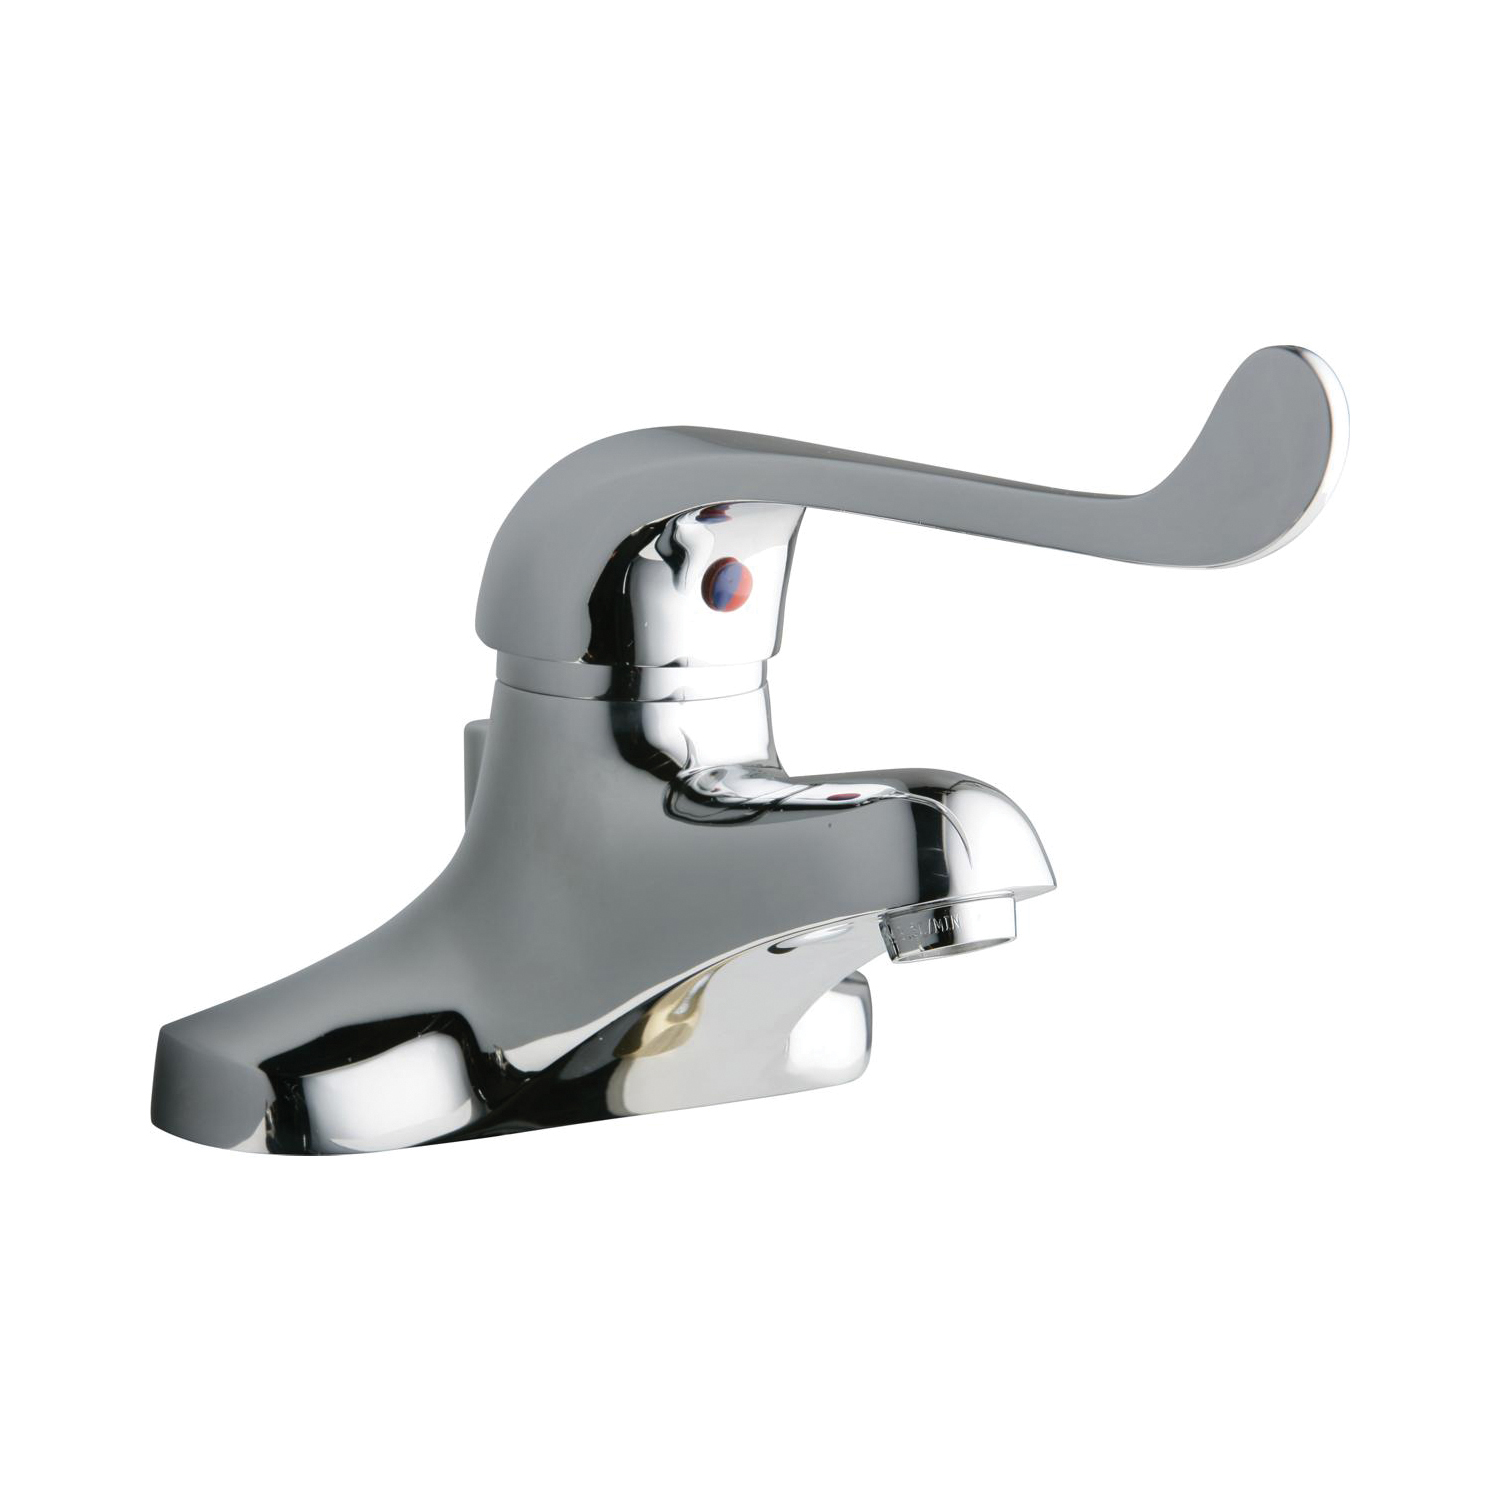 Elkay® LK423L7 Centerset Lavatory Faucet, Chrome Plated, 1 Handles, Pop-Up Drain, 0.5 gpm